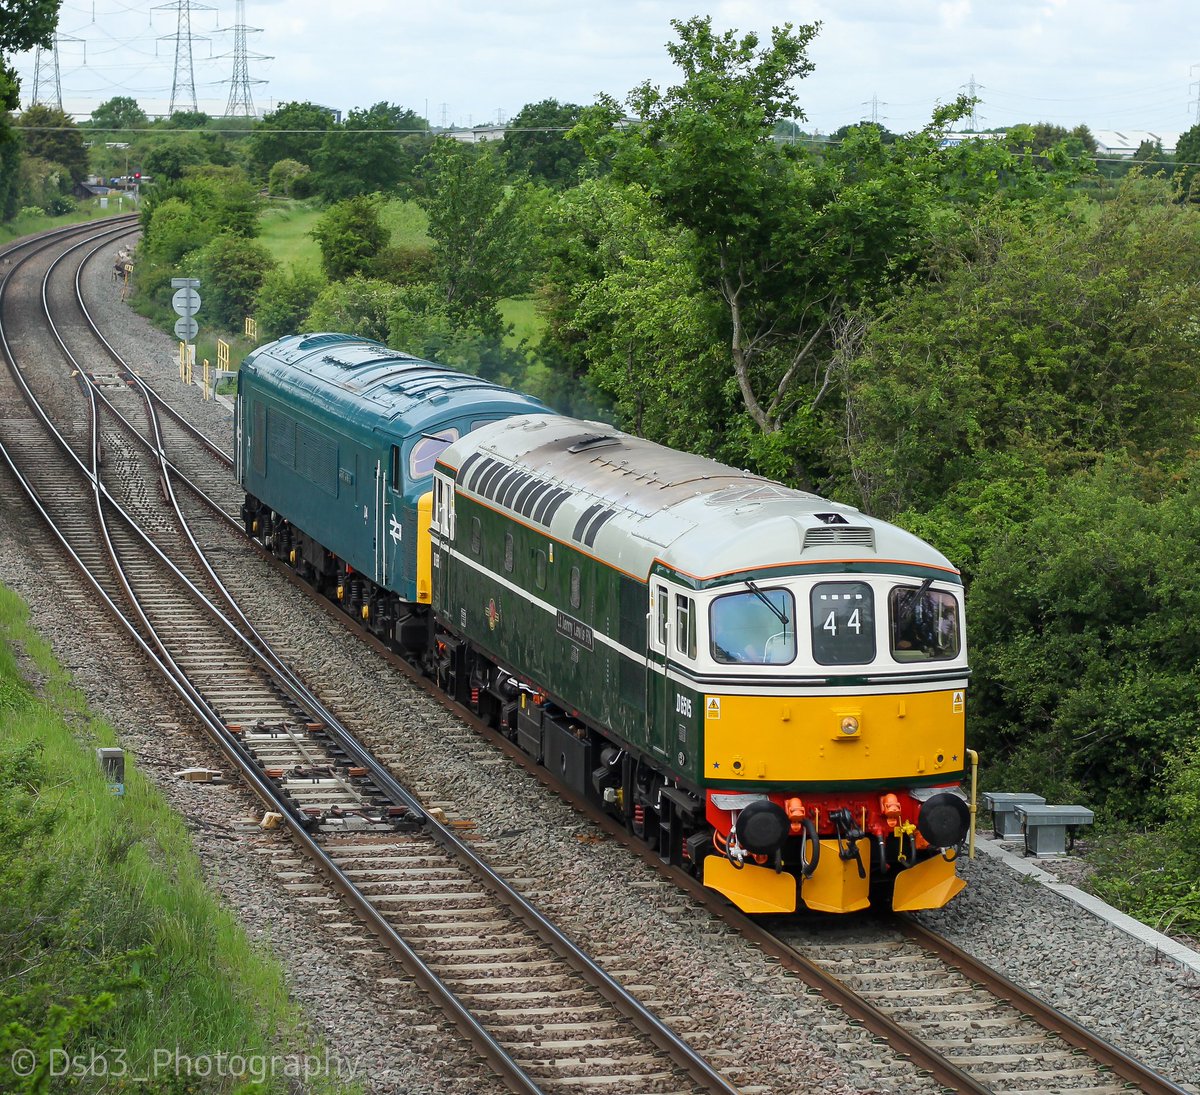 33012 and 44004 head through Caste Donnington working 0Z44 SVR - Butterly 

23/5/22 #class33 #class44